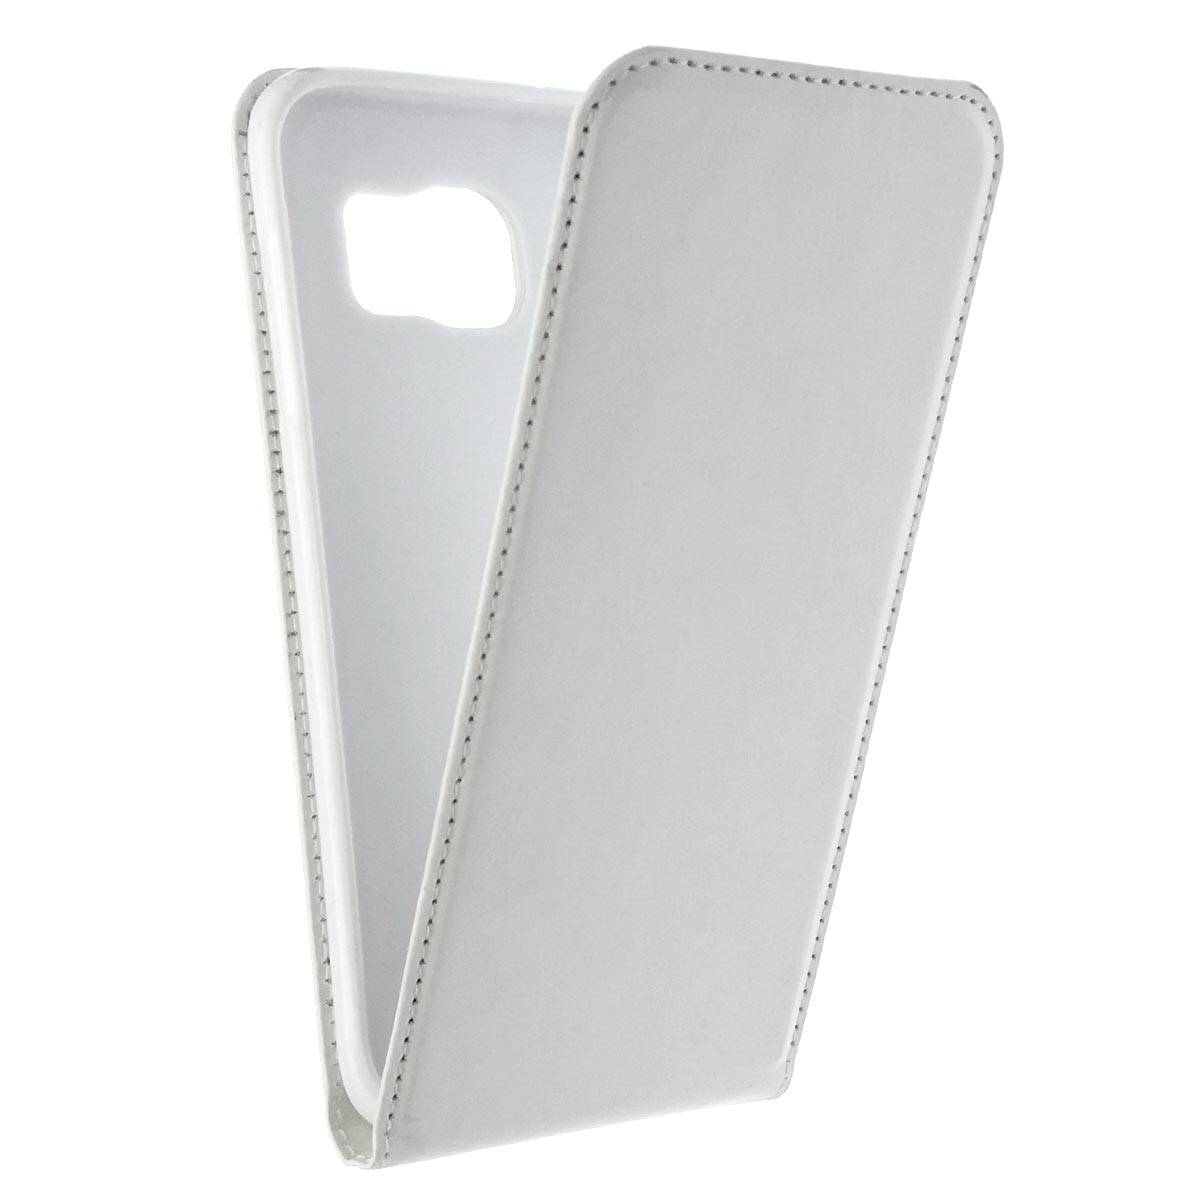 Чехол книжка Brauffen для SAMSUNG Galaxy S7 Edge (SM-G935), на магните, цвет белый